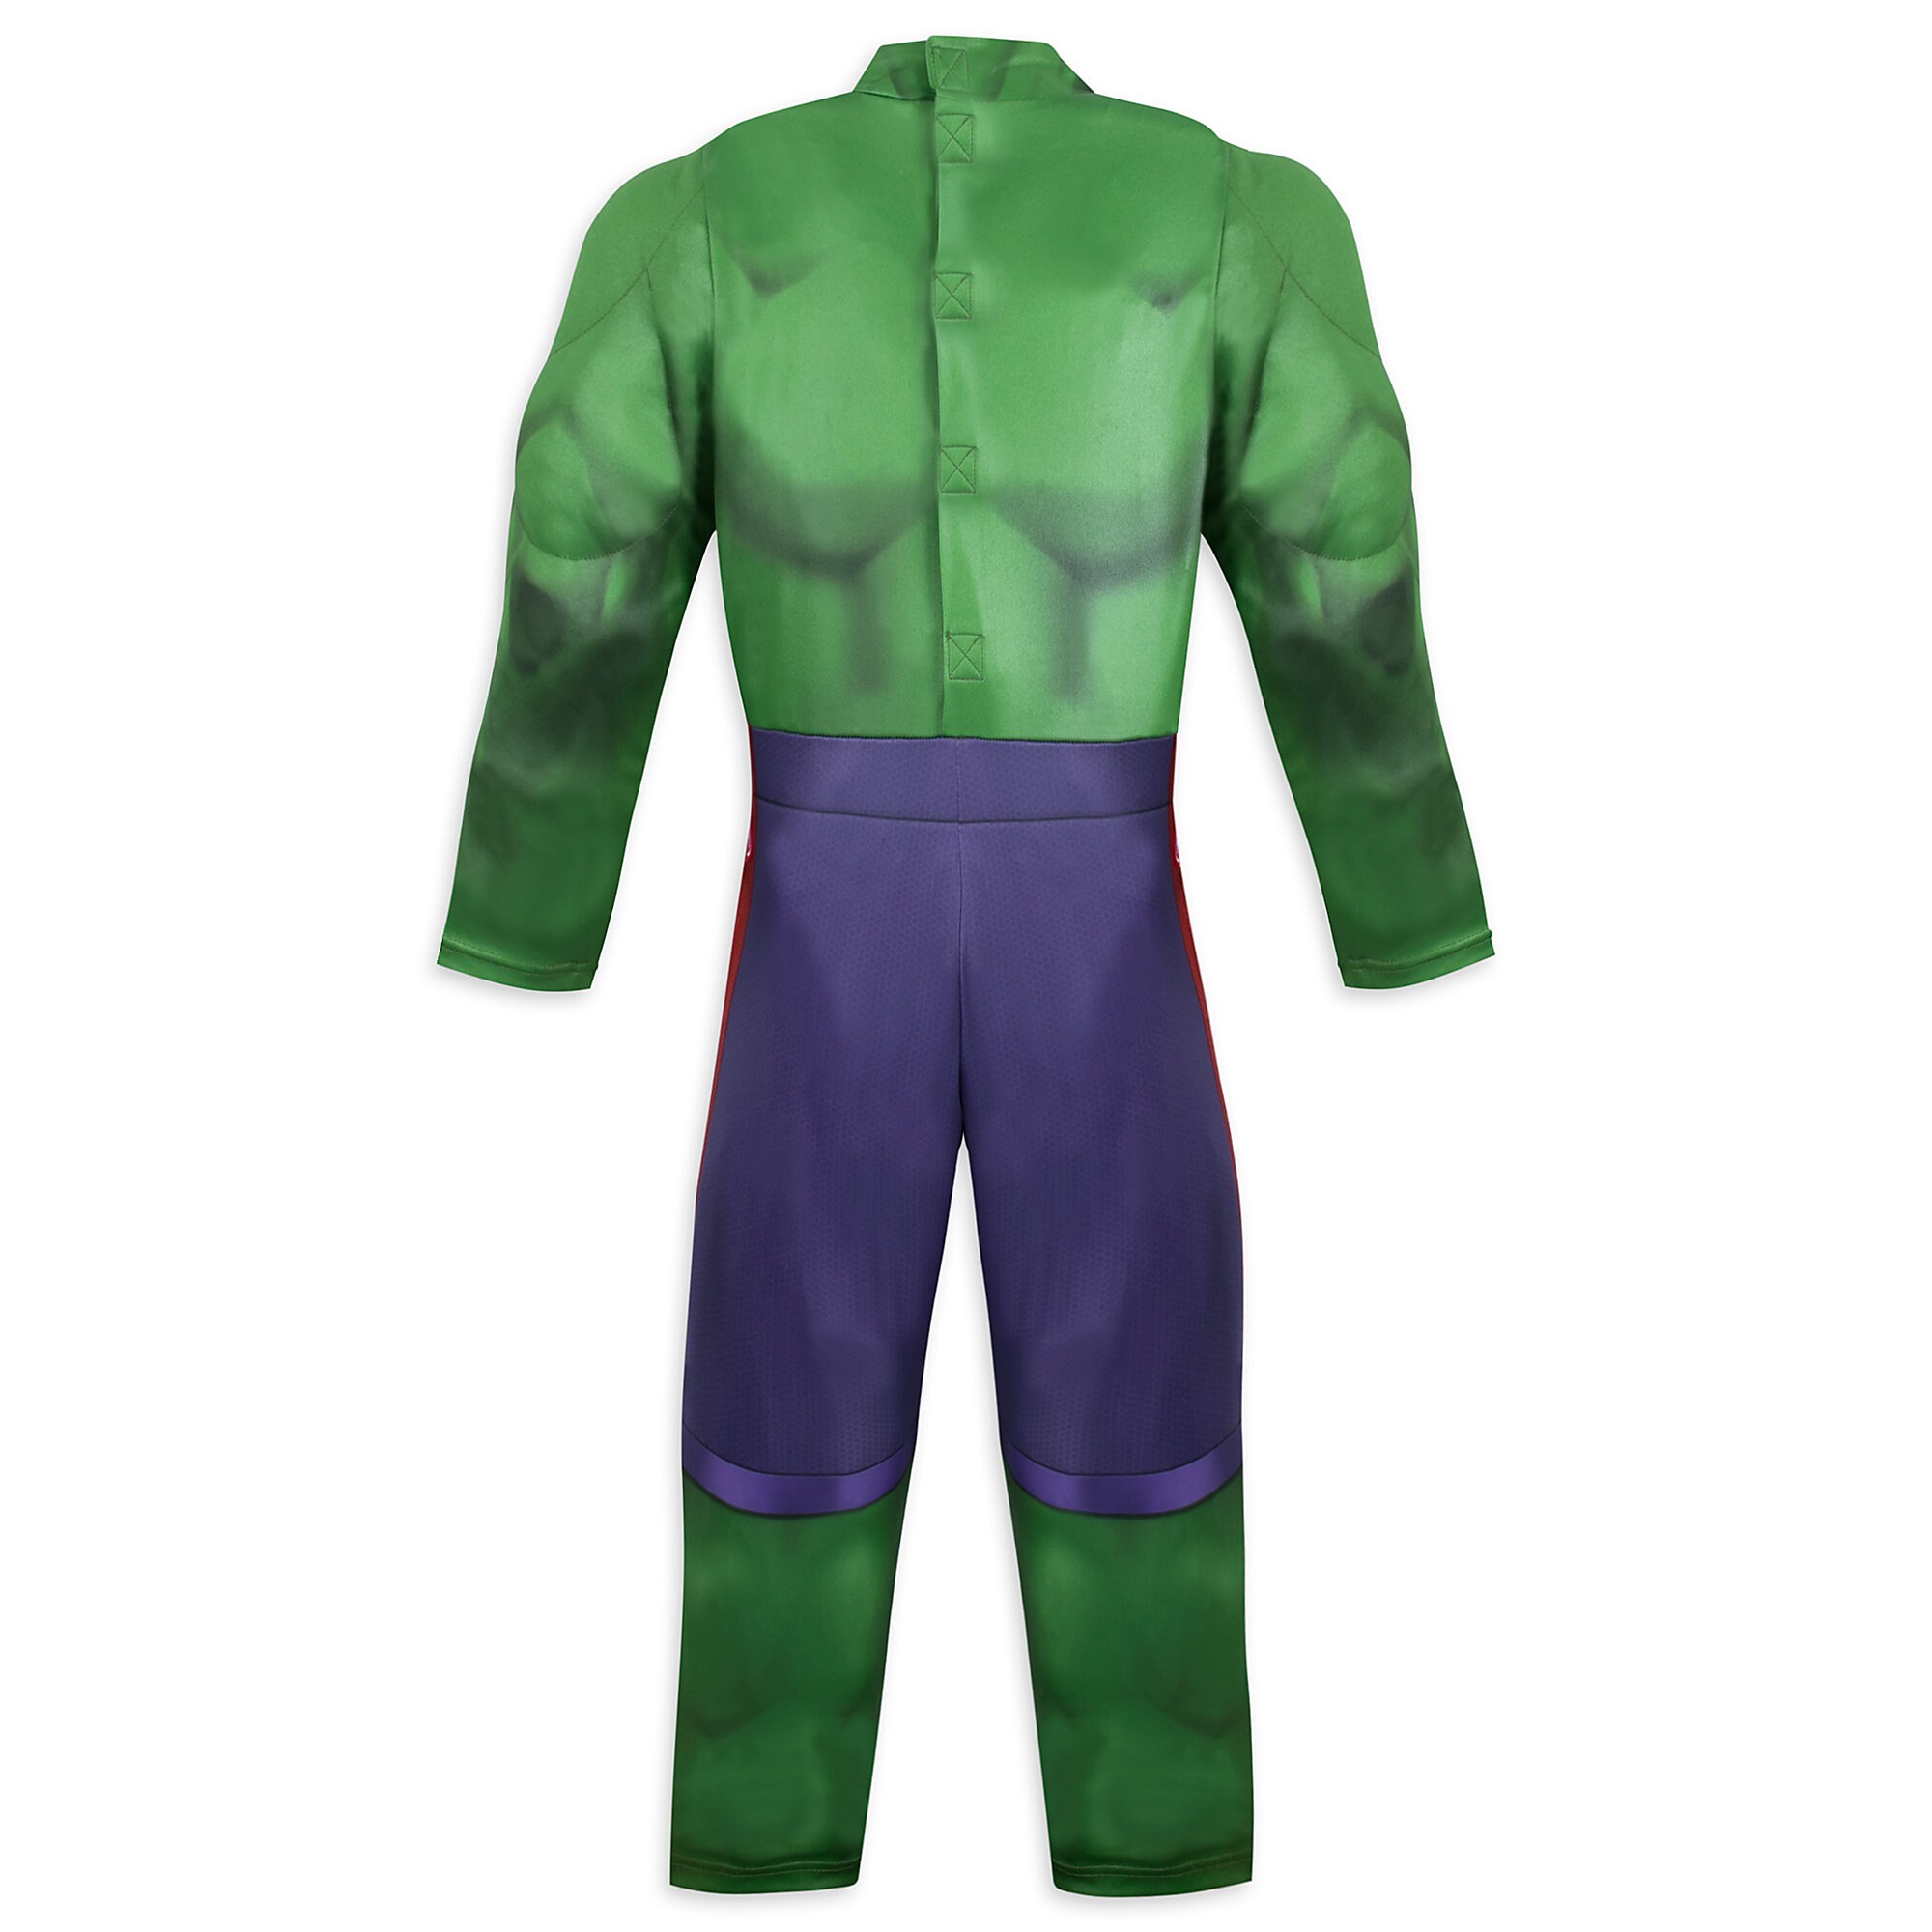 Hulk Costume for Kids